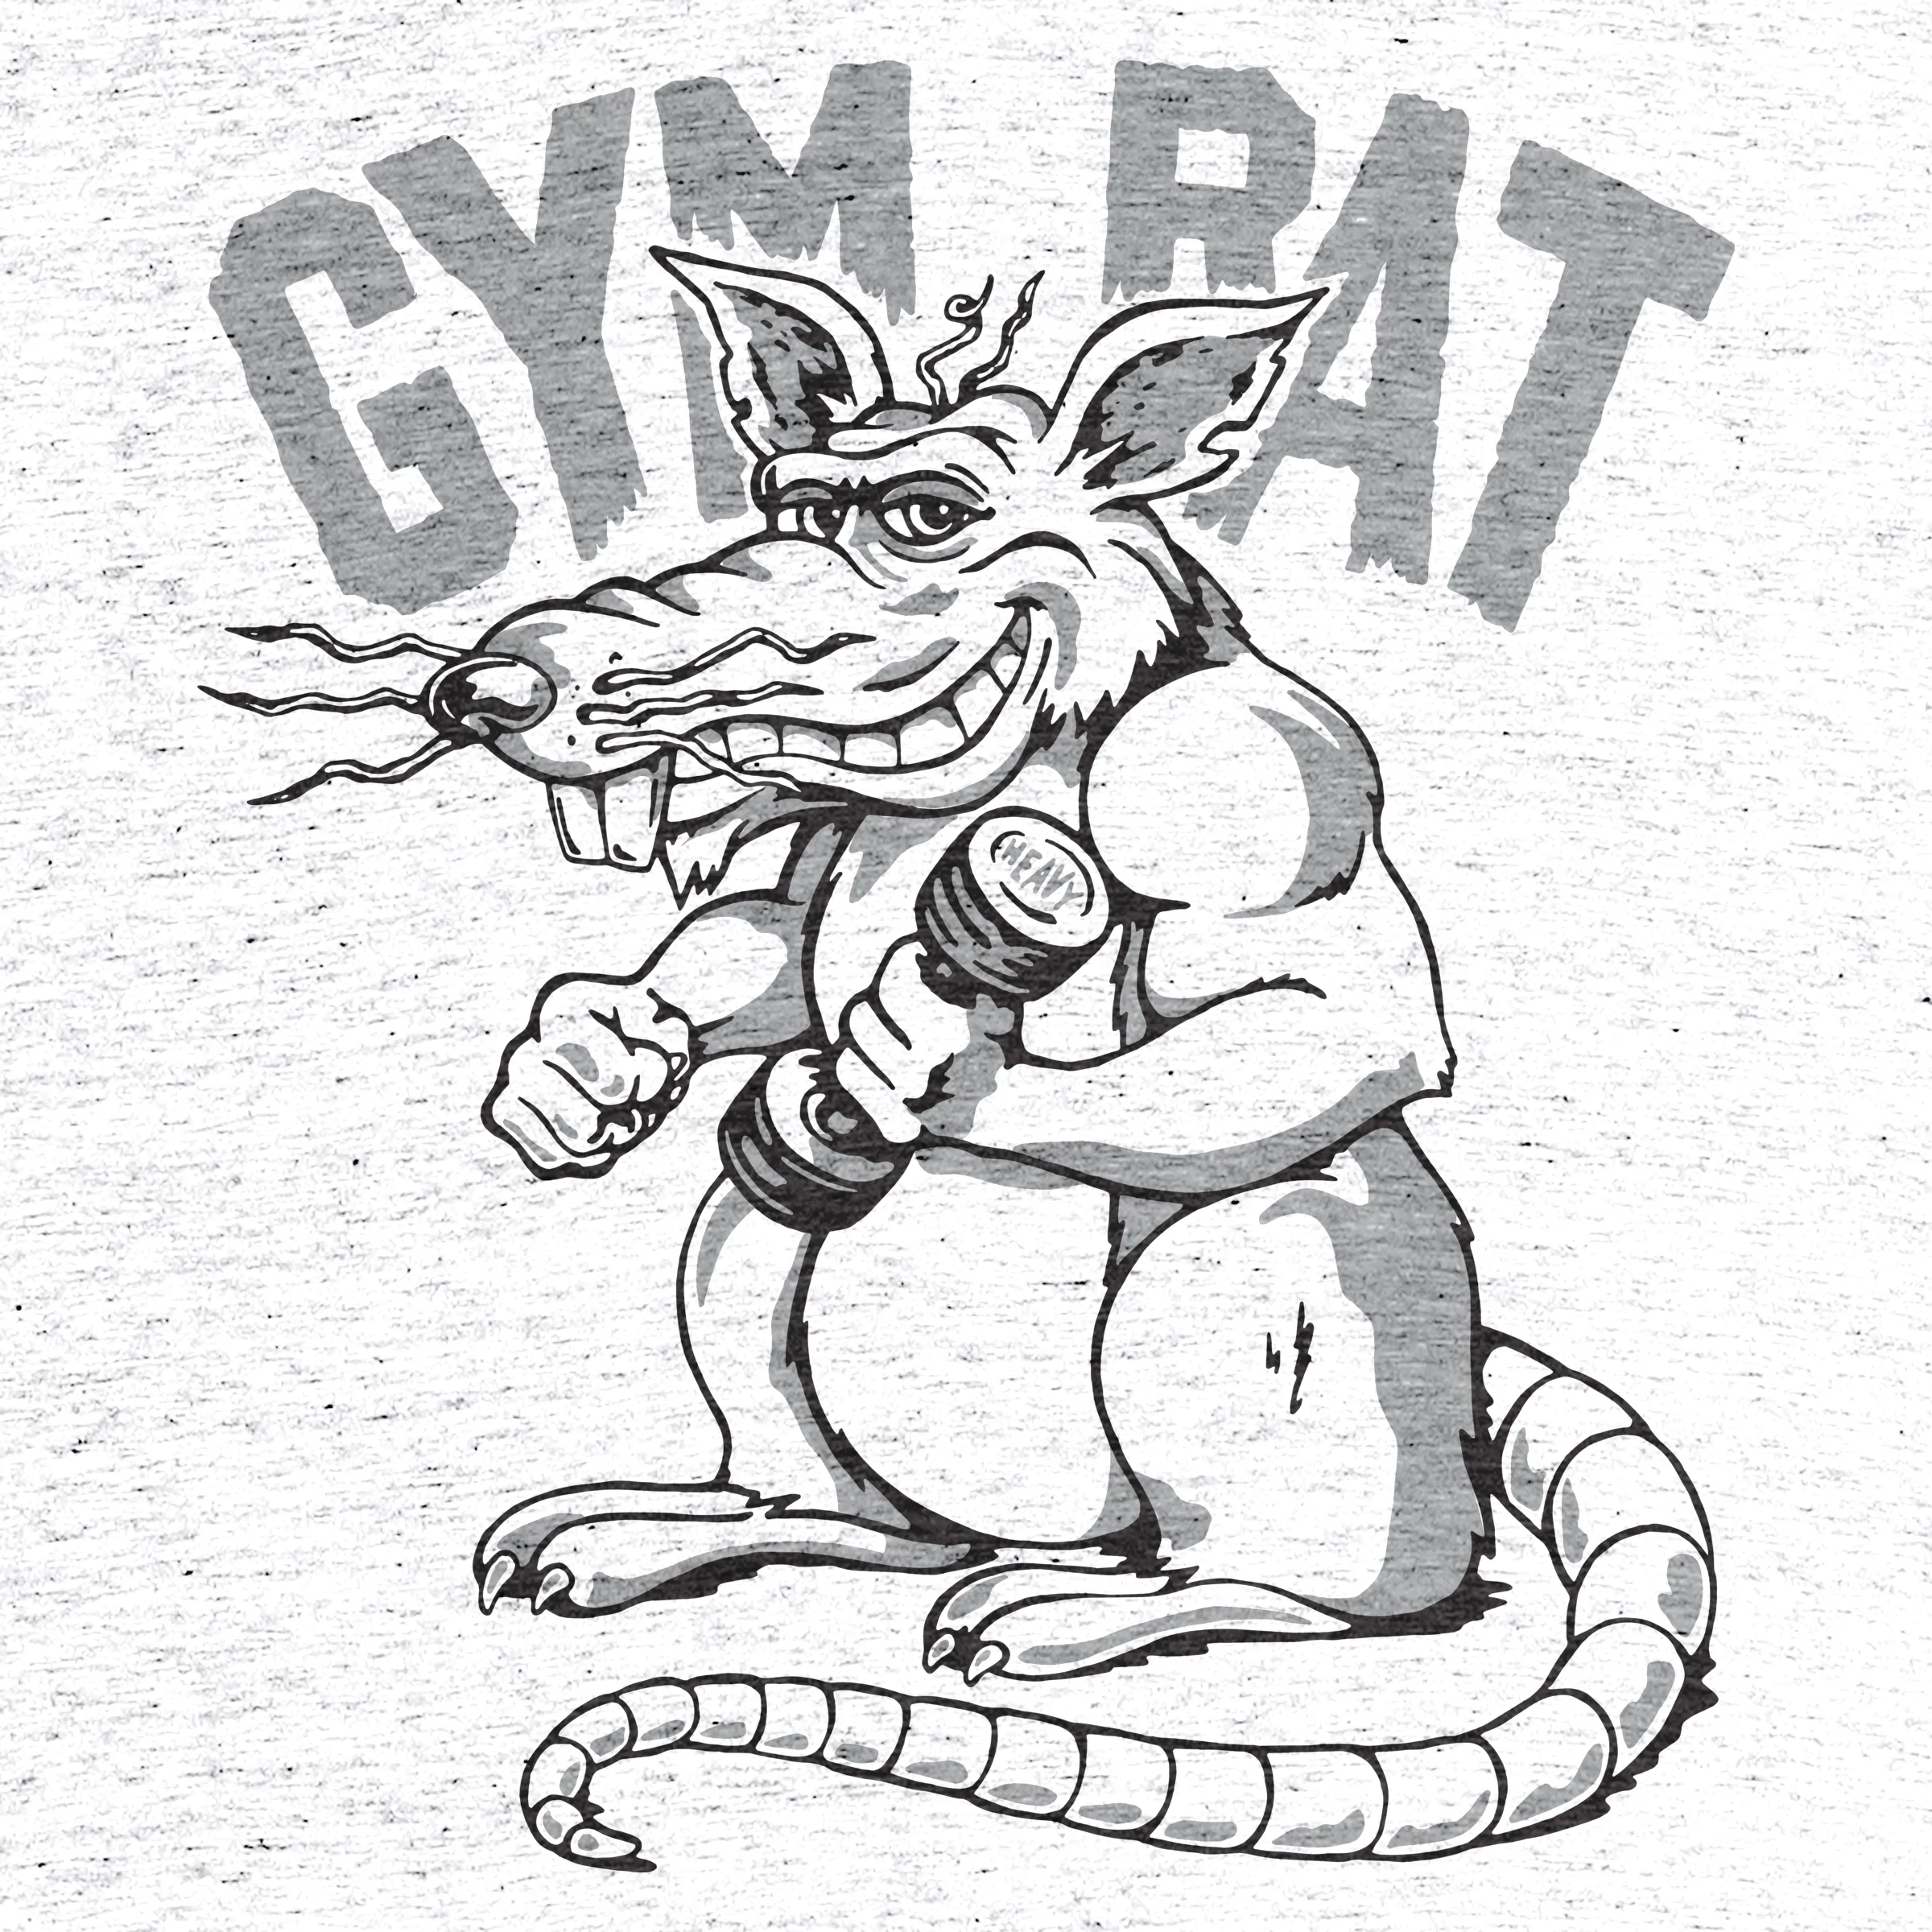 Hardcore Gym Rat” graphic tee, pullover hoodie, tank, onesie